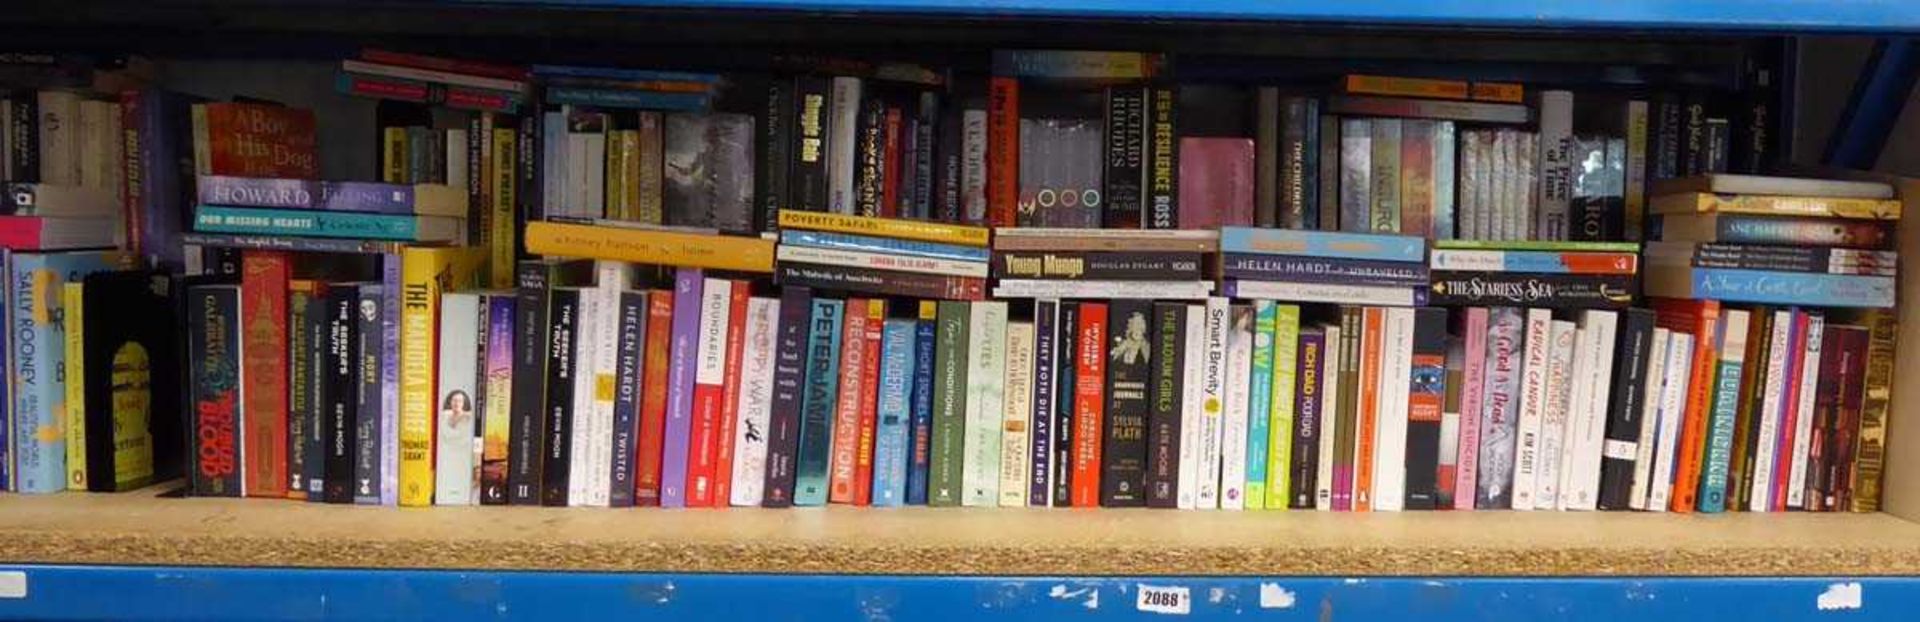 Half shelf of fiction books